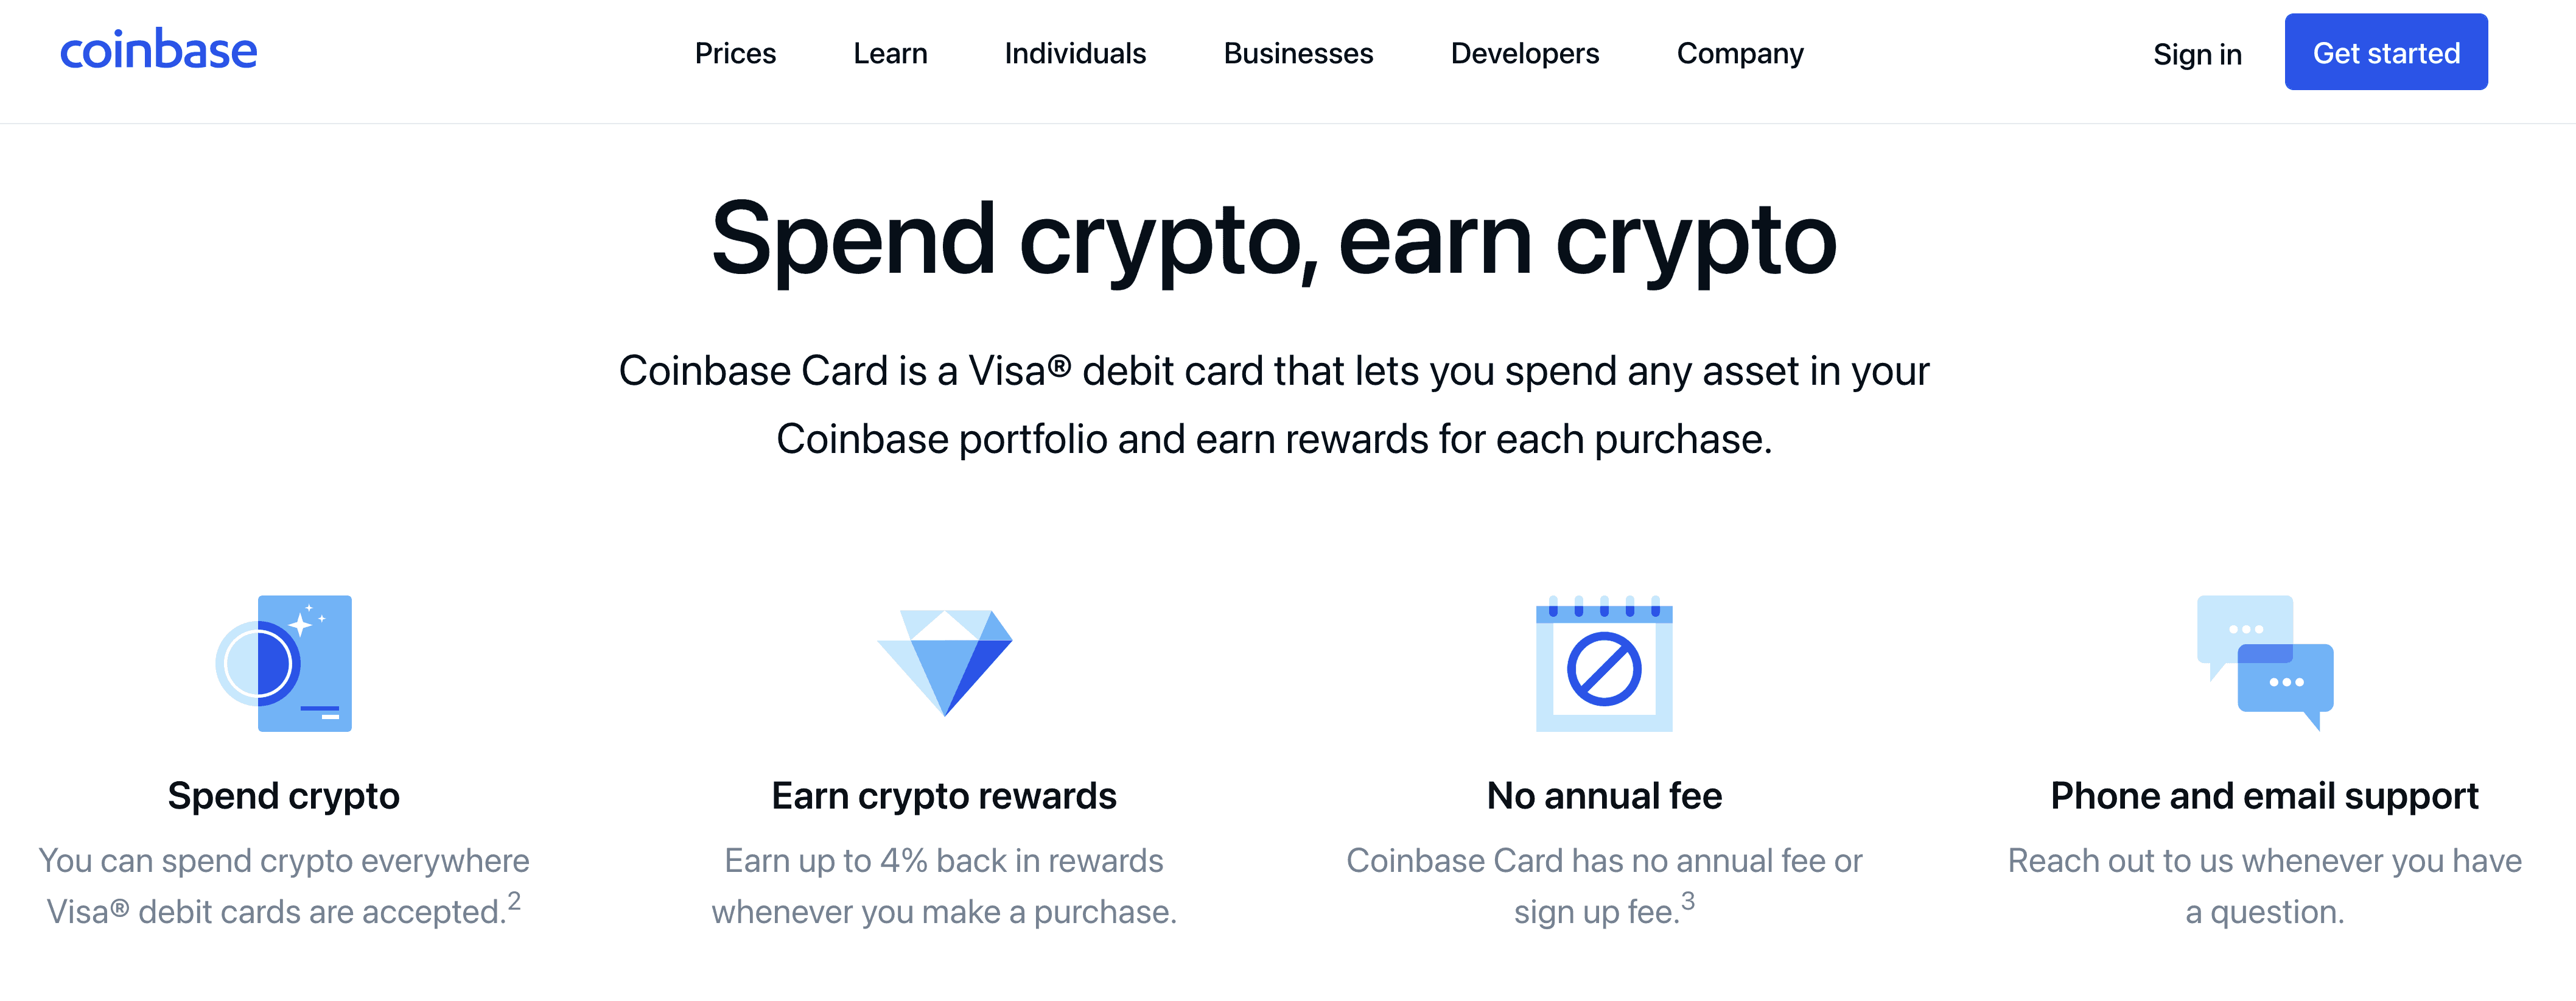 Coinbase Visa debit card features